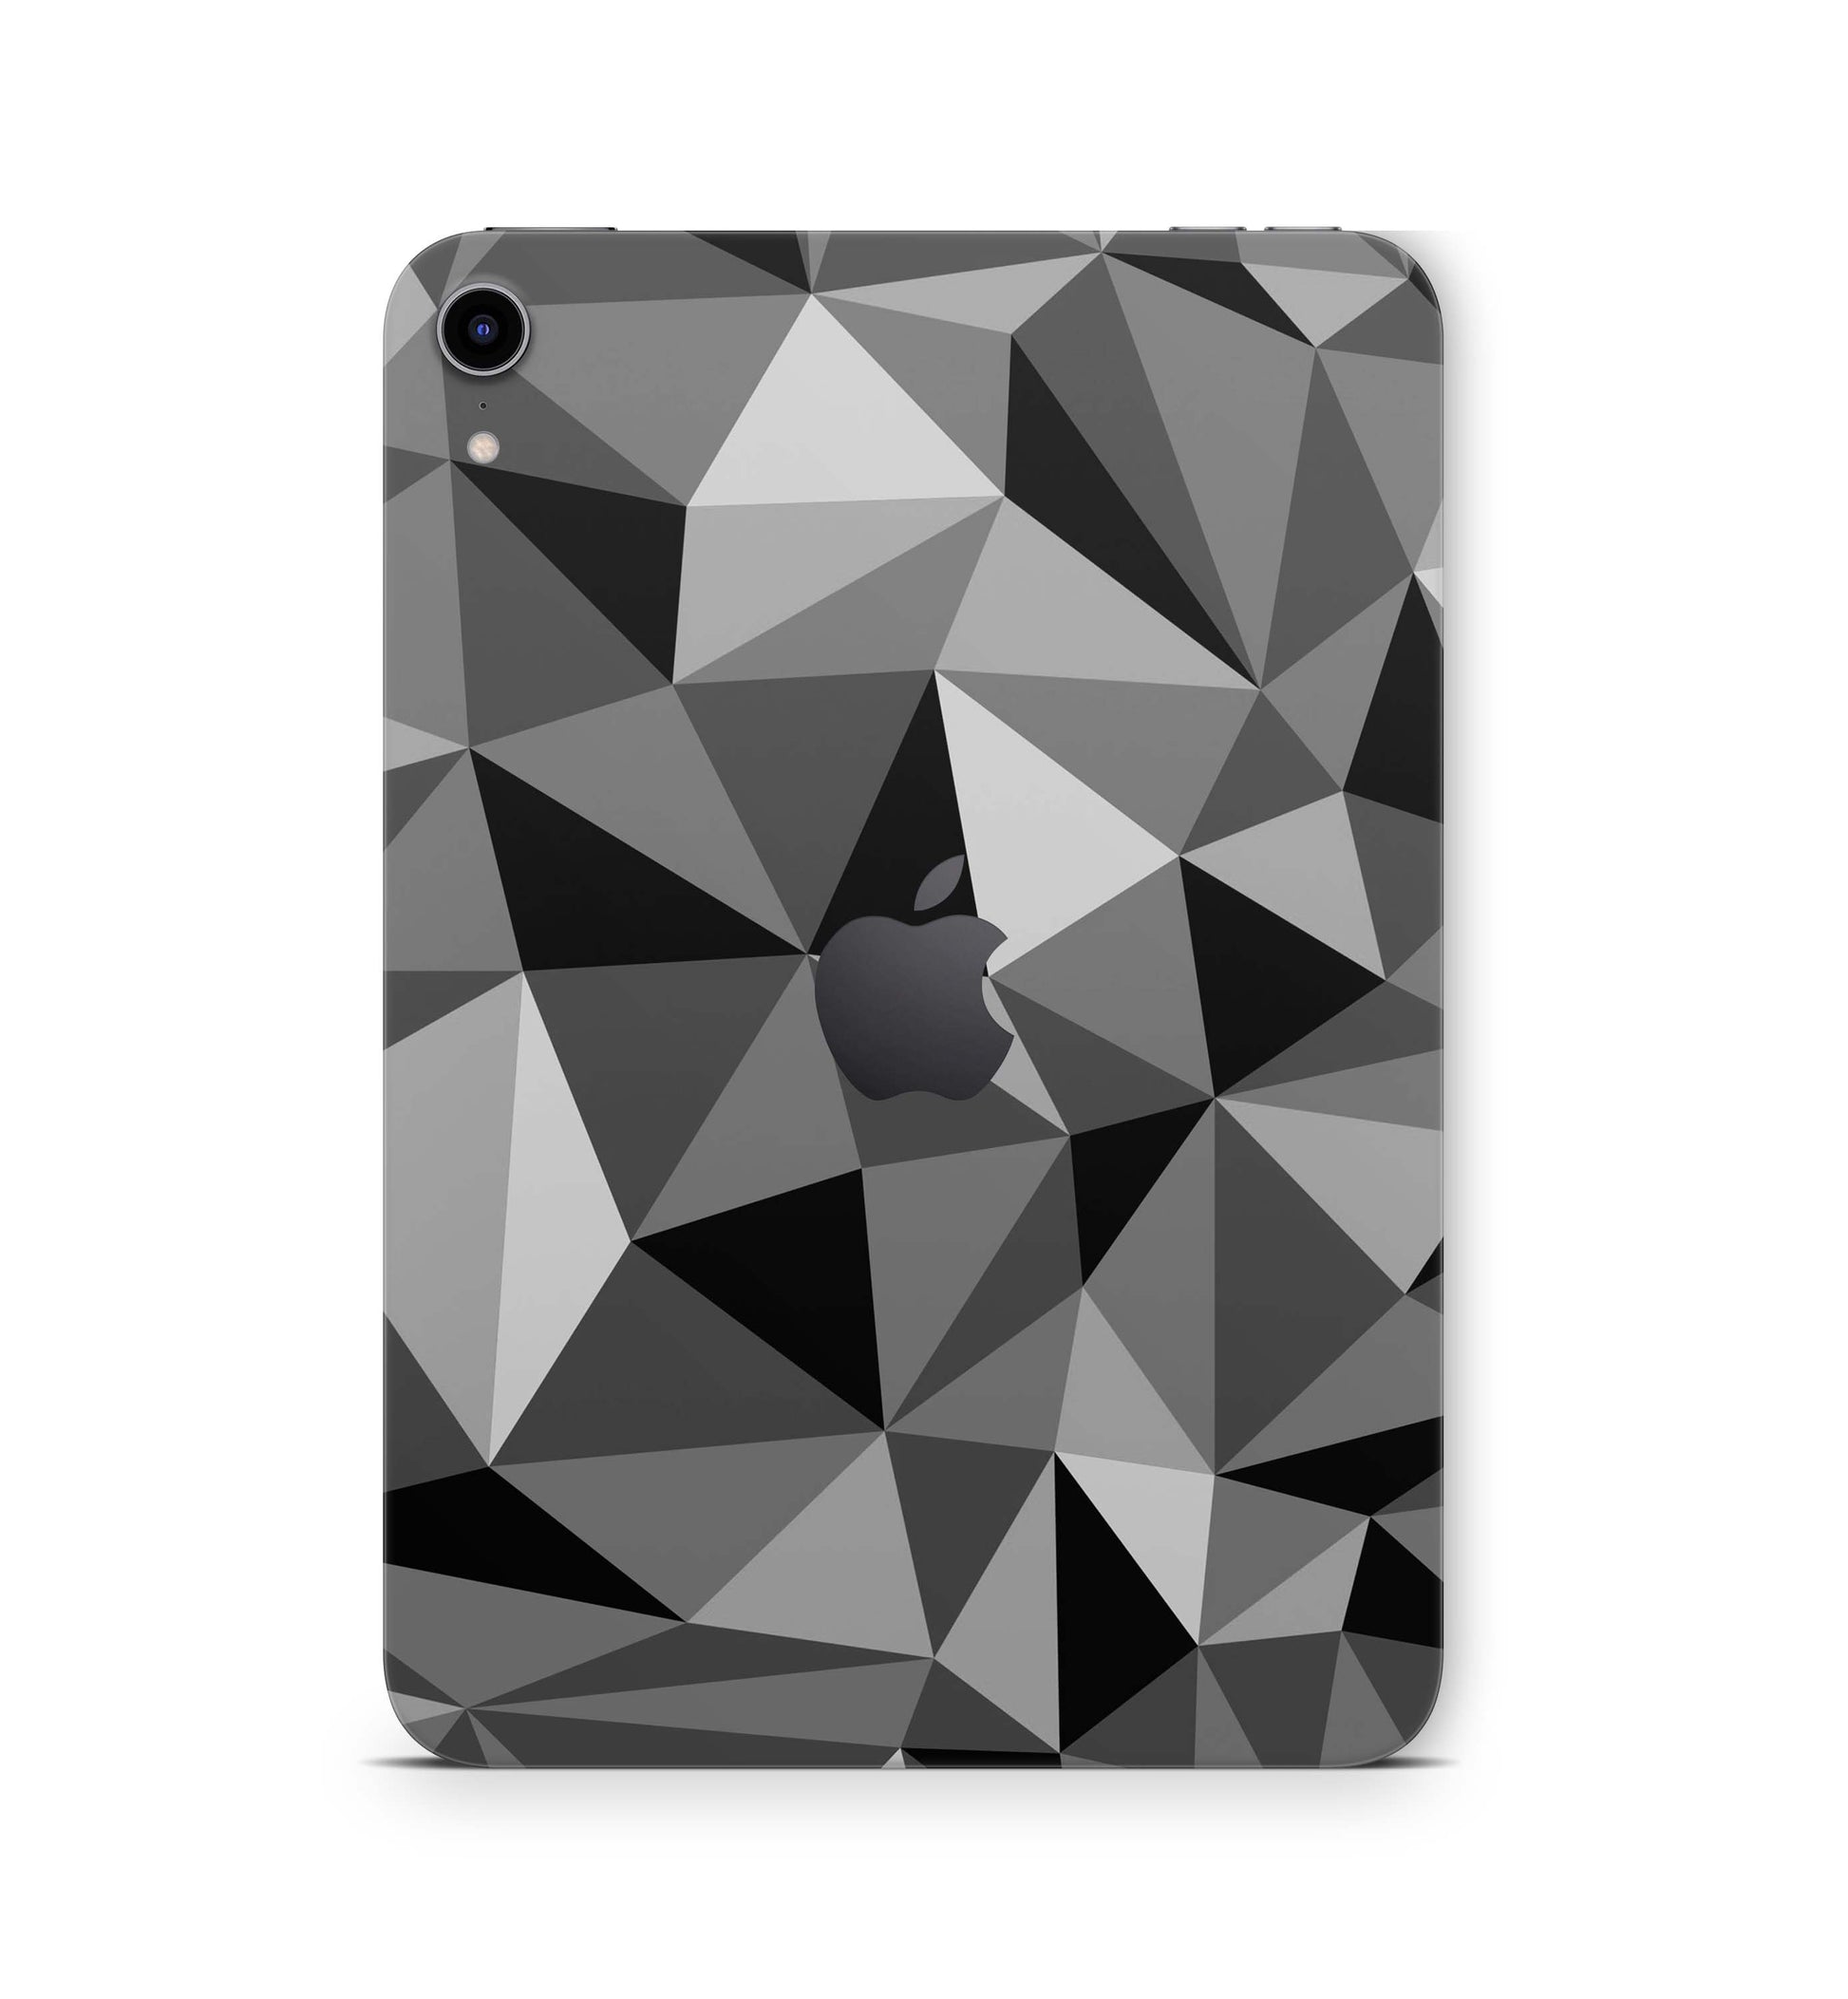 Apple iPad Skin Design Cover Folie Vinyl Skins & Wraps für alle iPad Modelle Aufkleber Skins4u Polygrey  